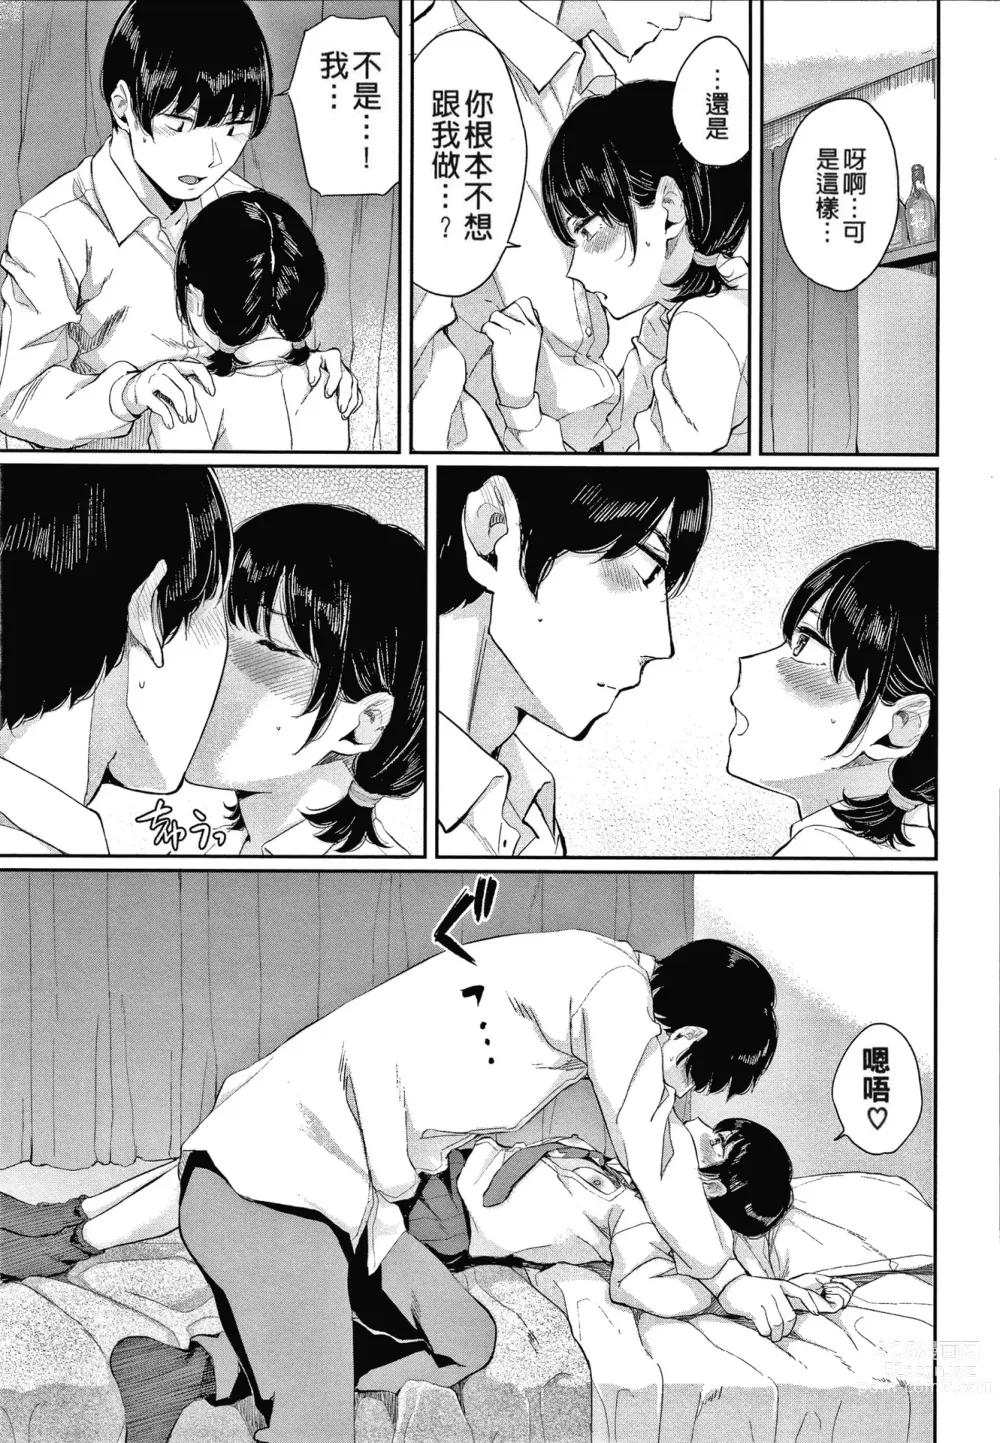 Page 9 of manga Hikage no Hana (uncensored)